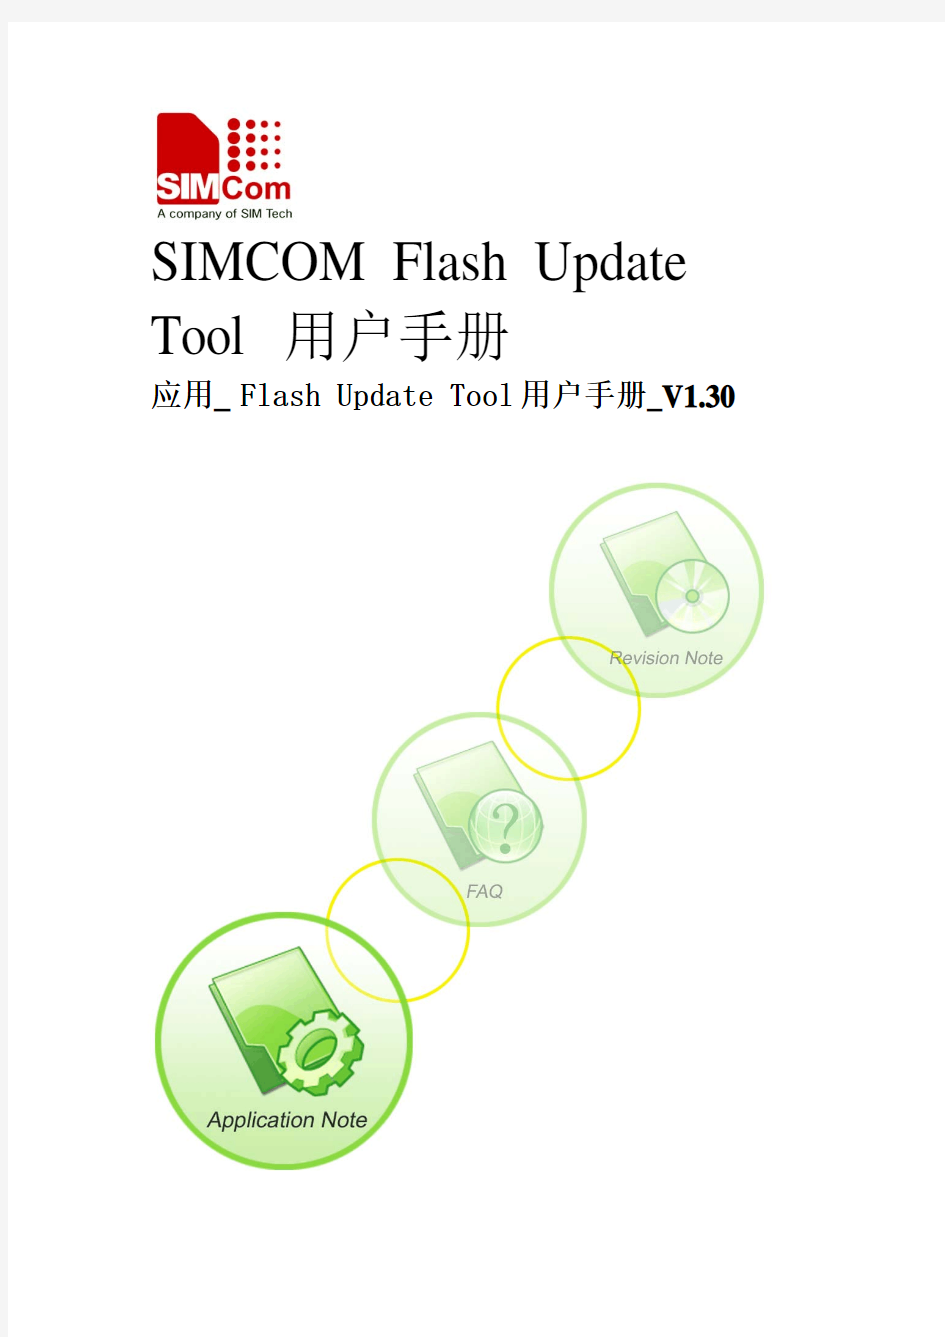 SIMCOM Flash Update Tool 用户手册